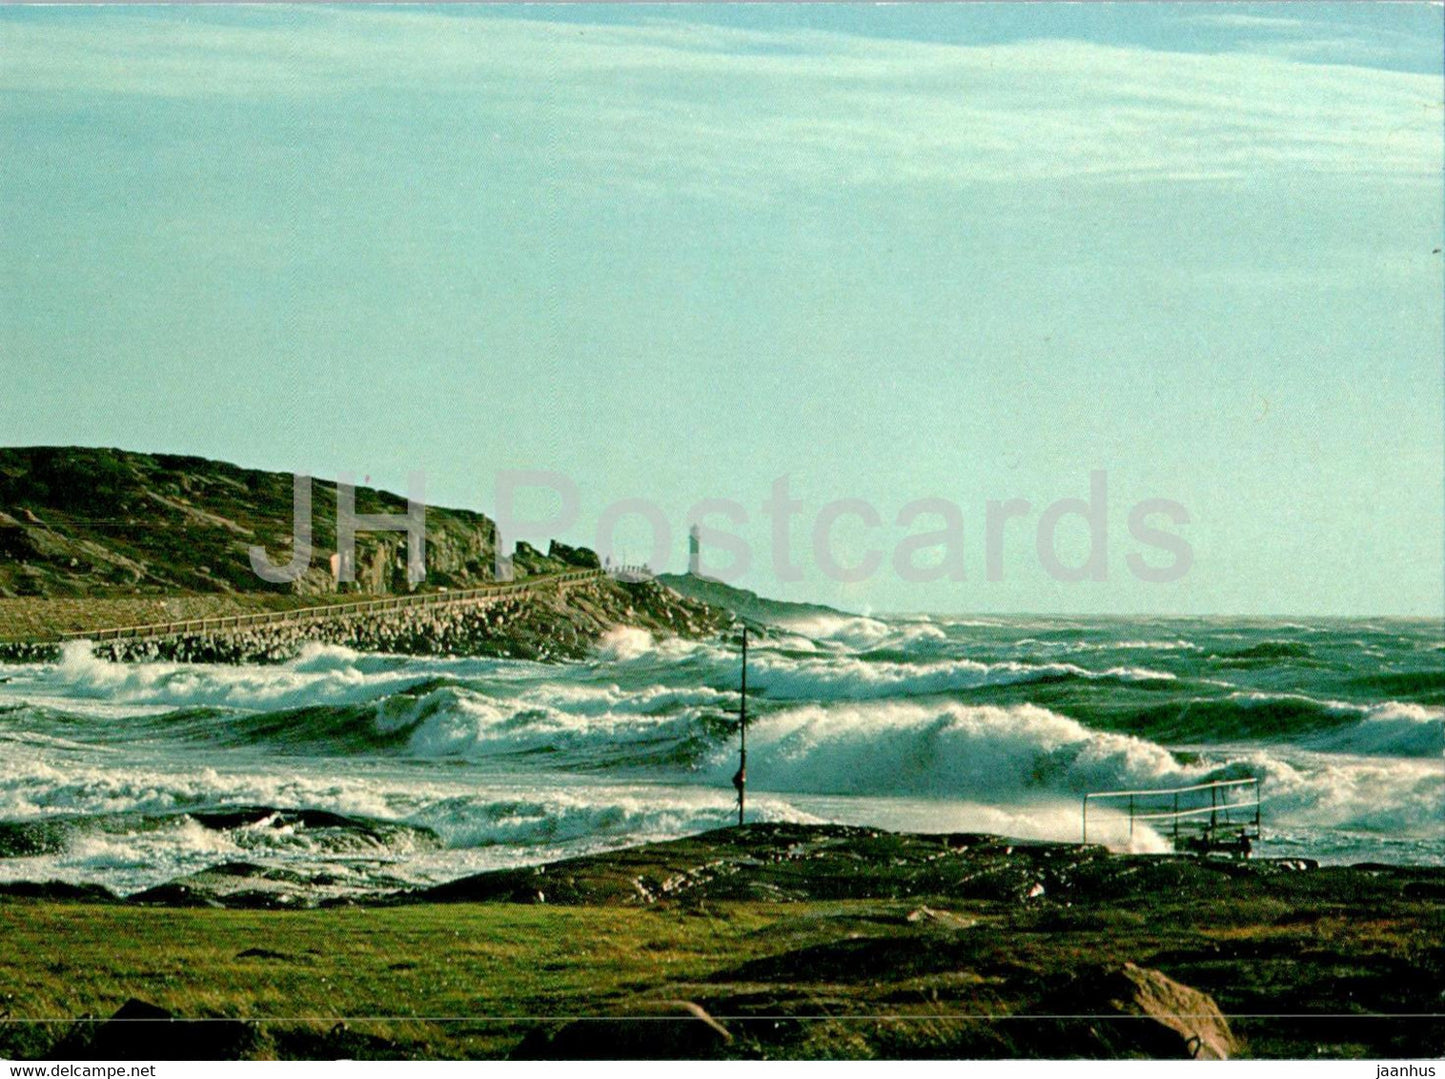 Subbefyr i Storm - Varberg - Halland - 67 - Sweden - unused - JH Postcards